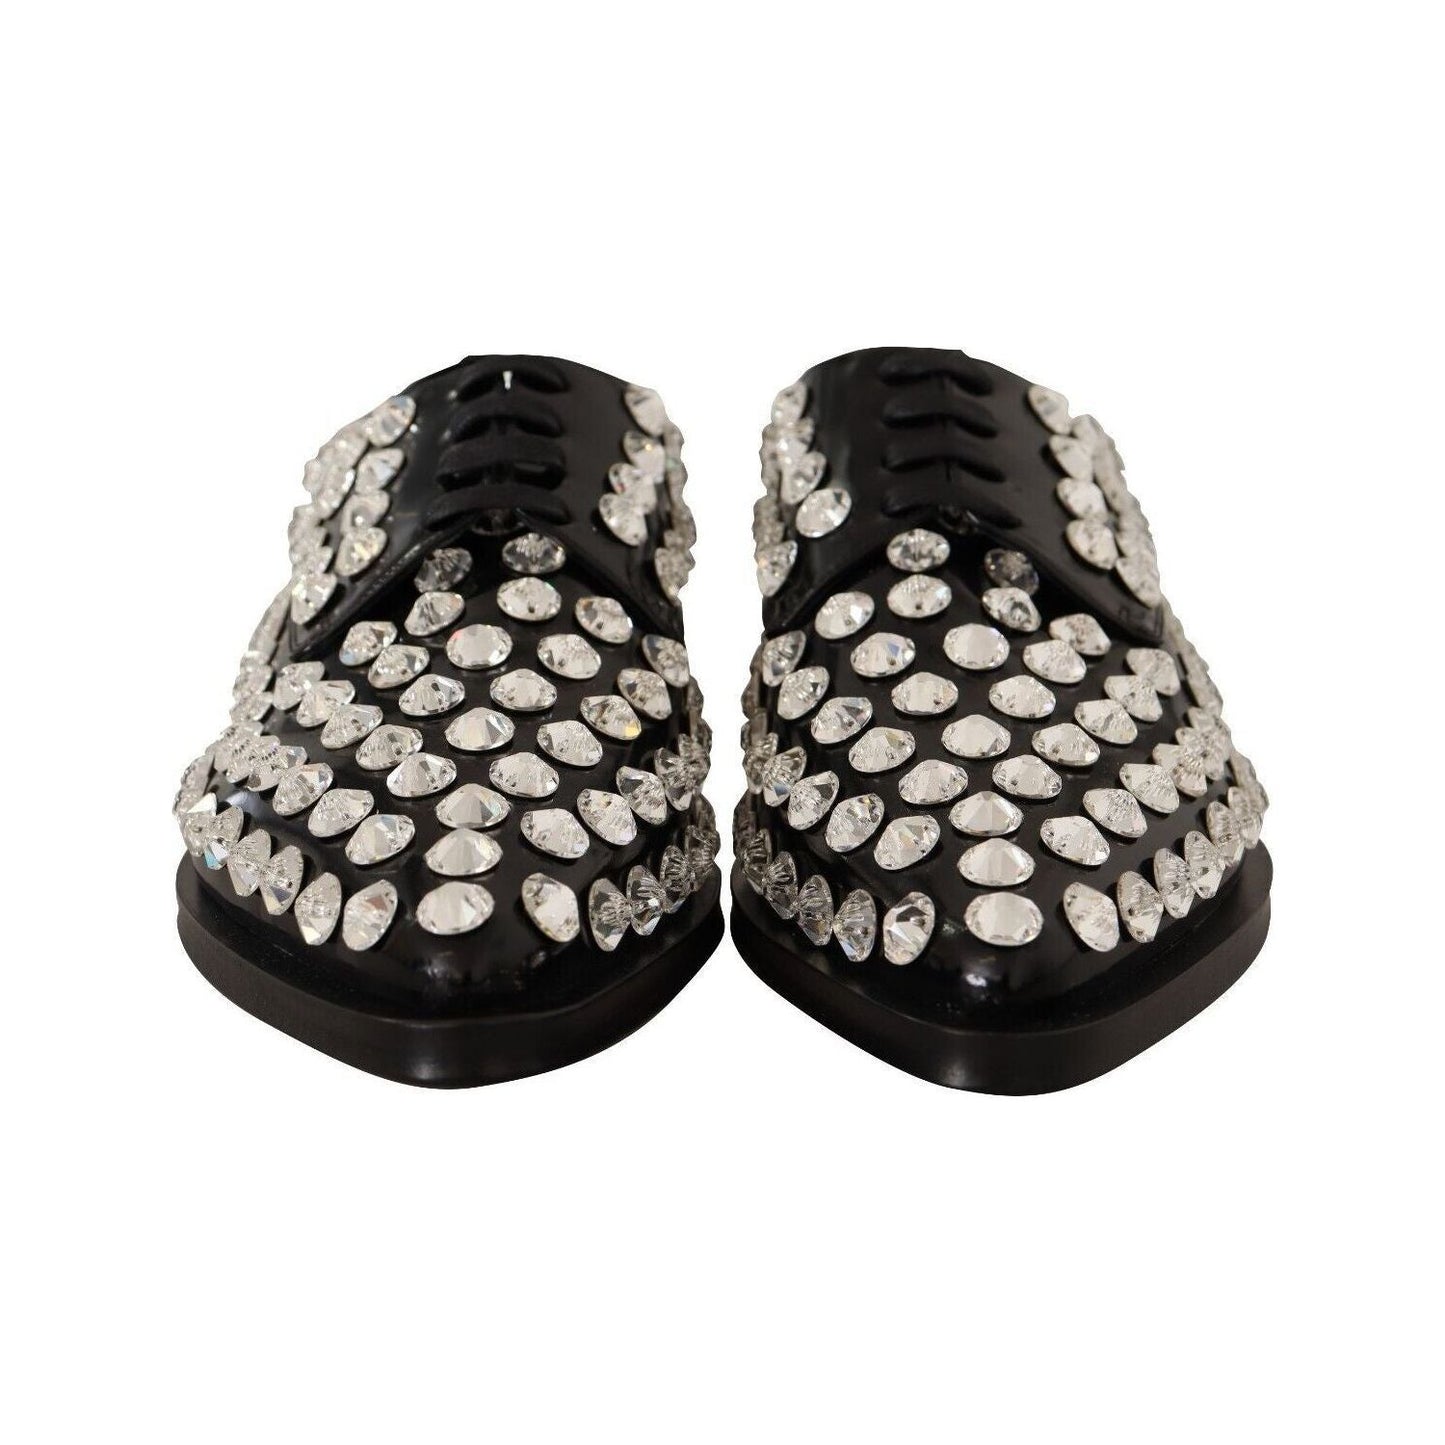 Dolce & Gabbana Crystal-Embellished Leather Formal Flats black-leather-crystals-lace-up-formal-shoes